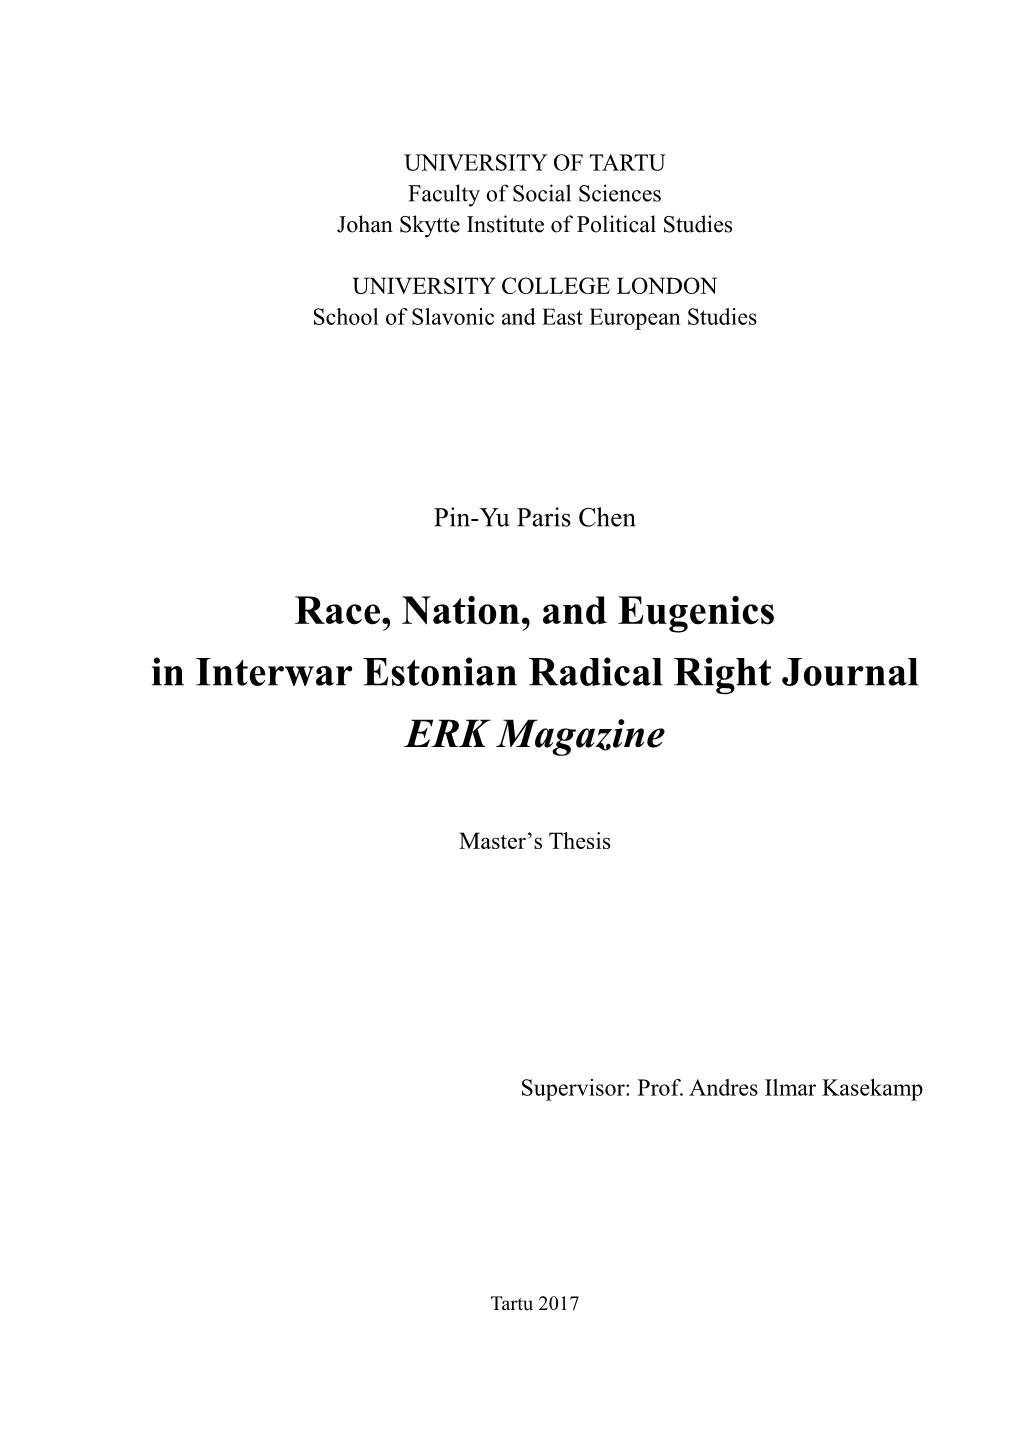 Race, Nation, and Eugenics in Interwar Estonian Radical Right Journal ERK Magazine